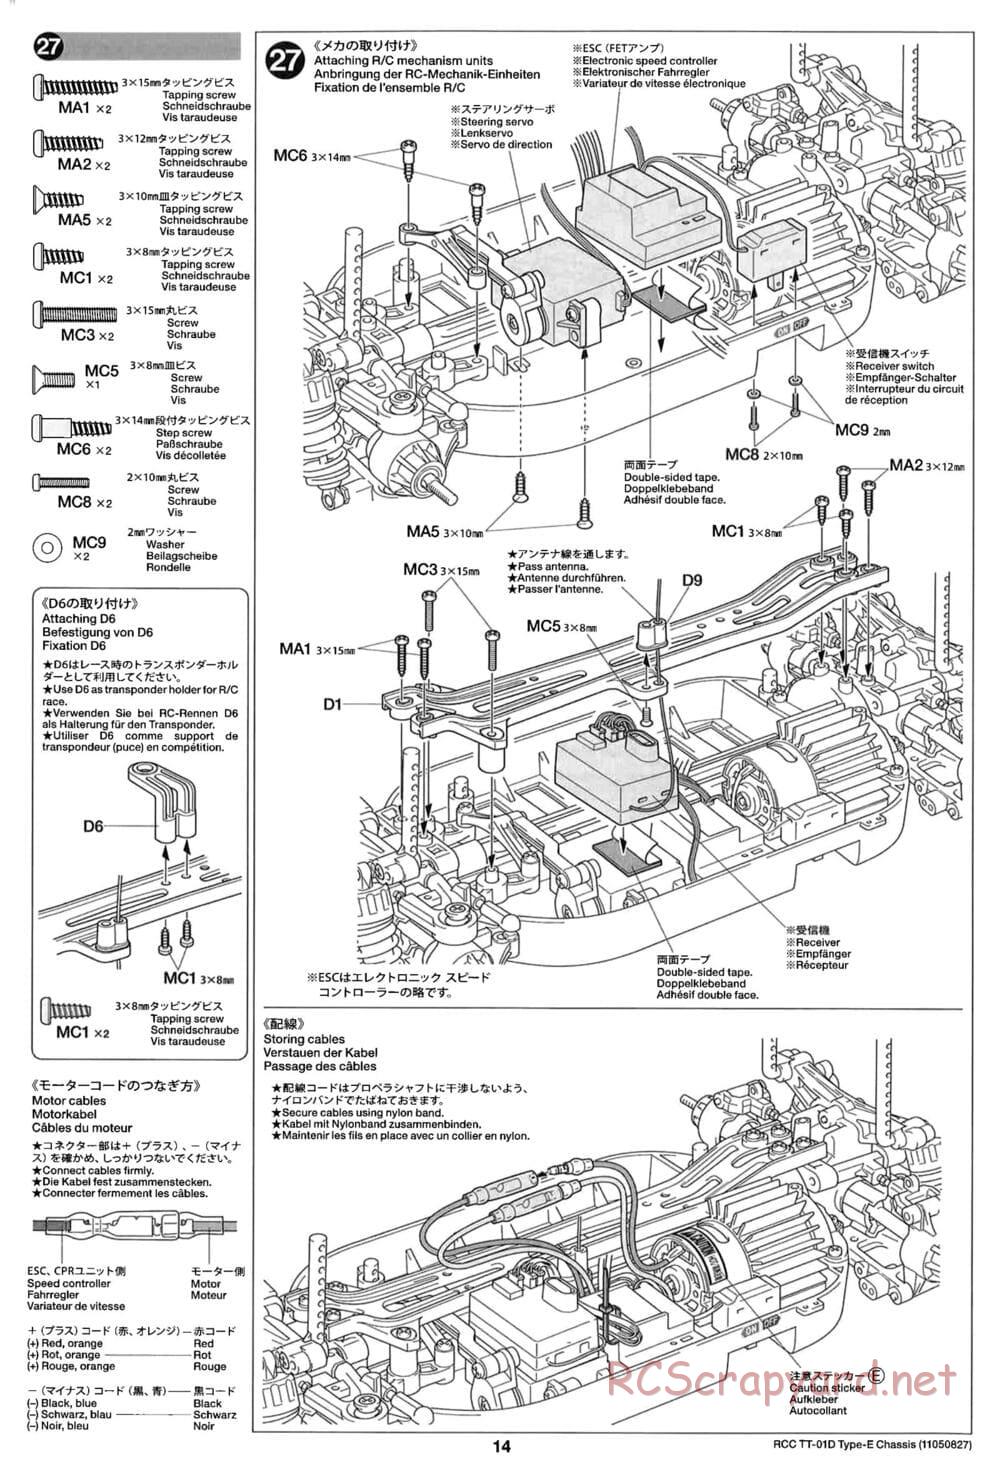 Tamiya - TT-01D Type-E (TT-01ED) - Drift Spec Chassis - Manual - Page 14